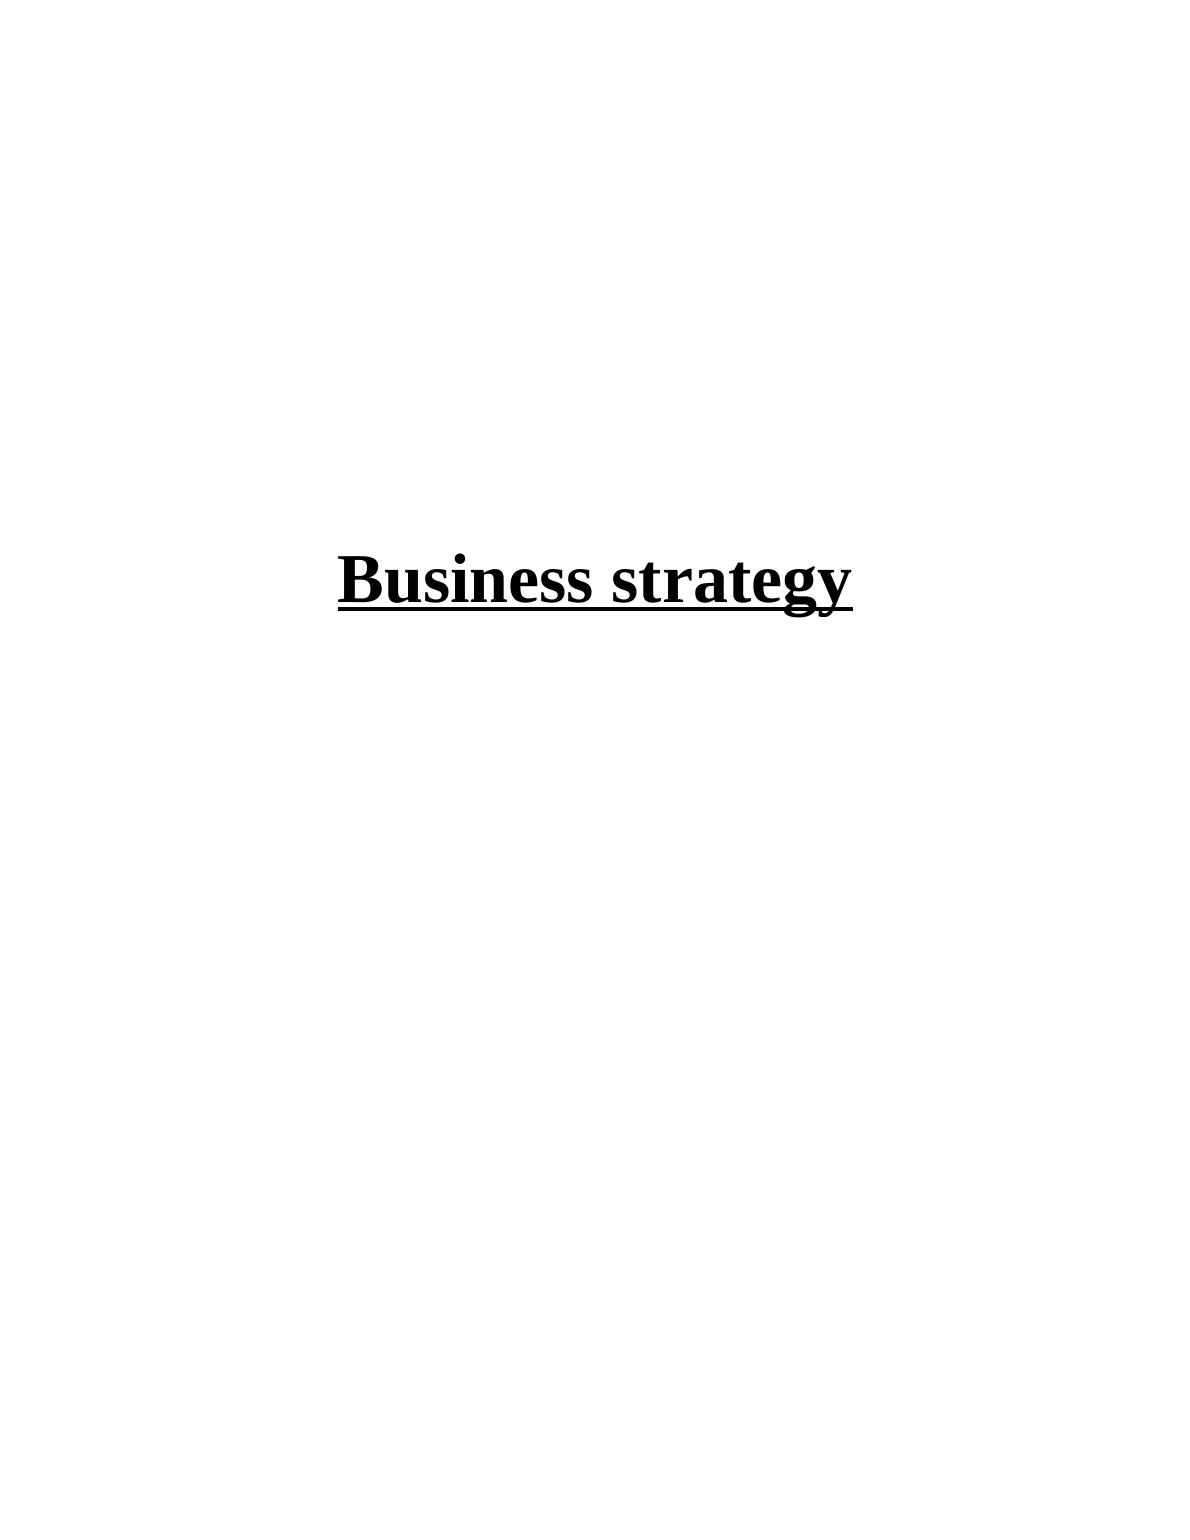 Business Strategy of Sainsbury Organisation_1